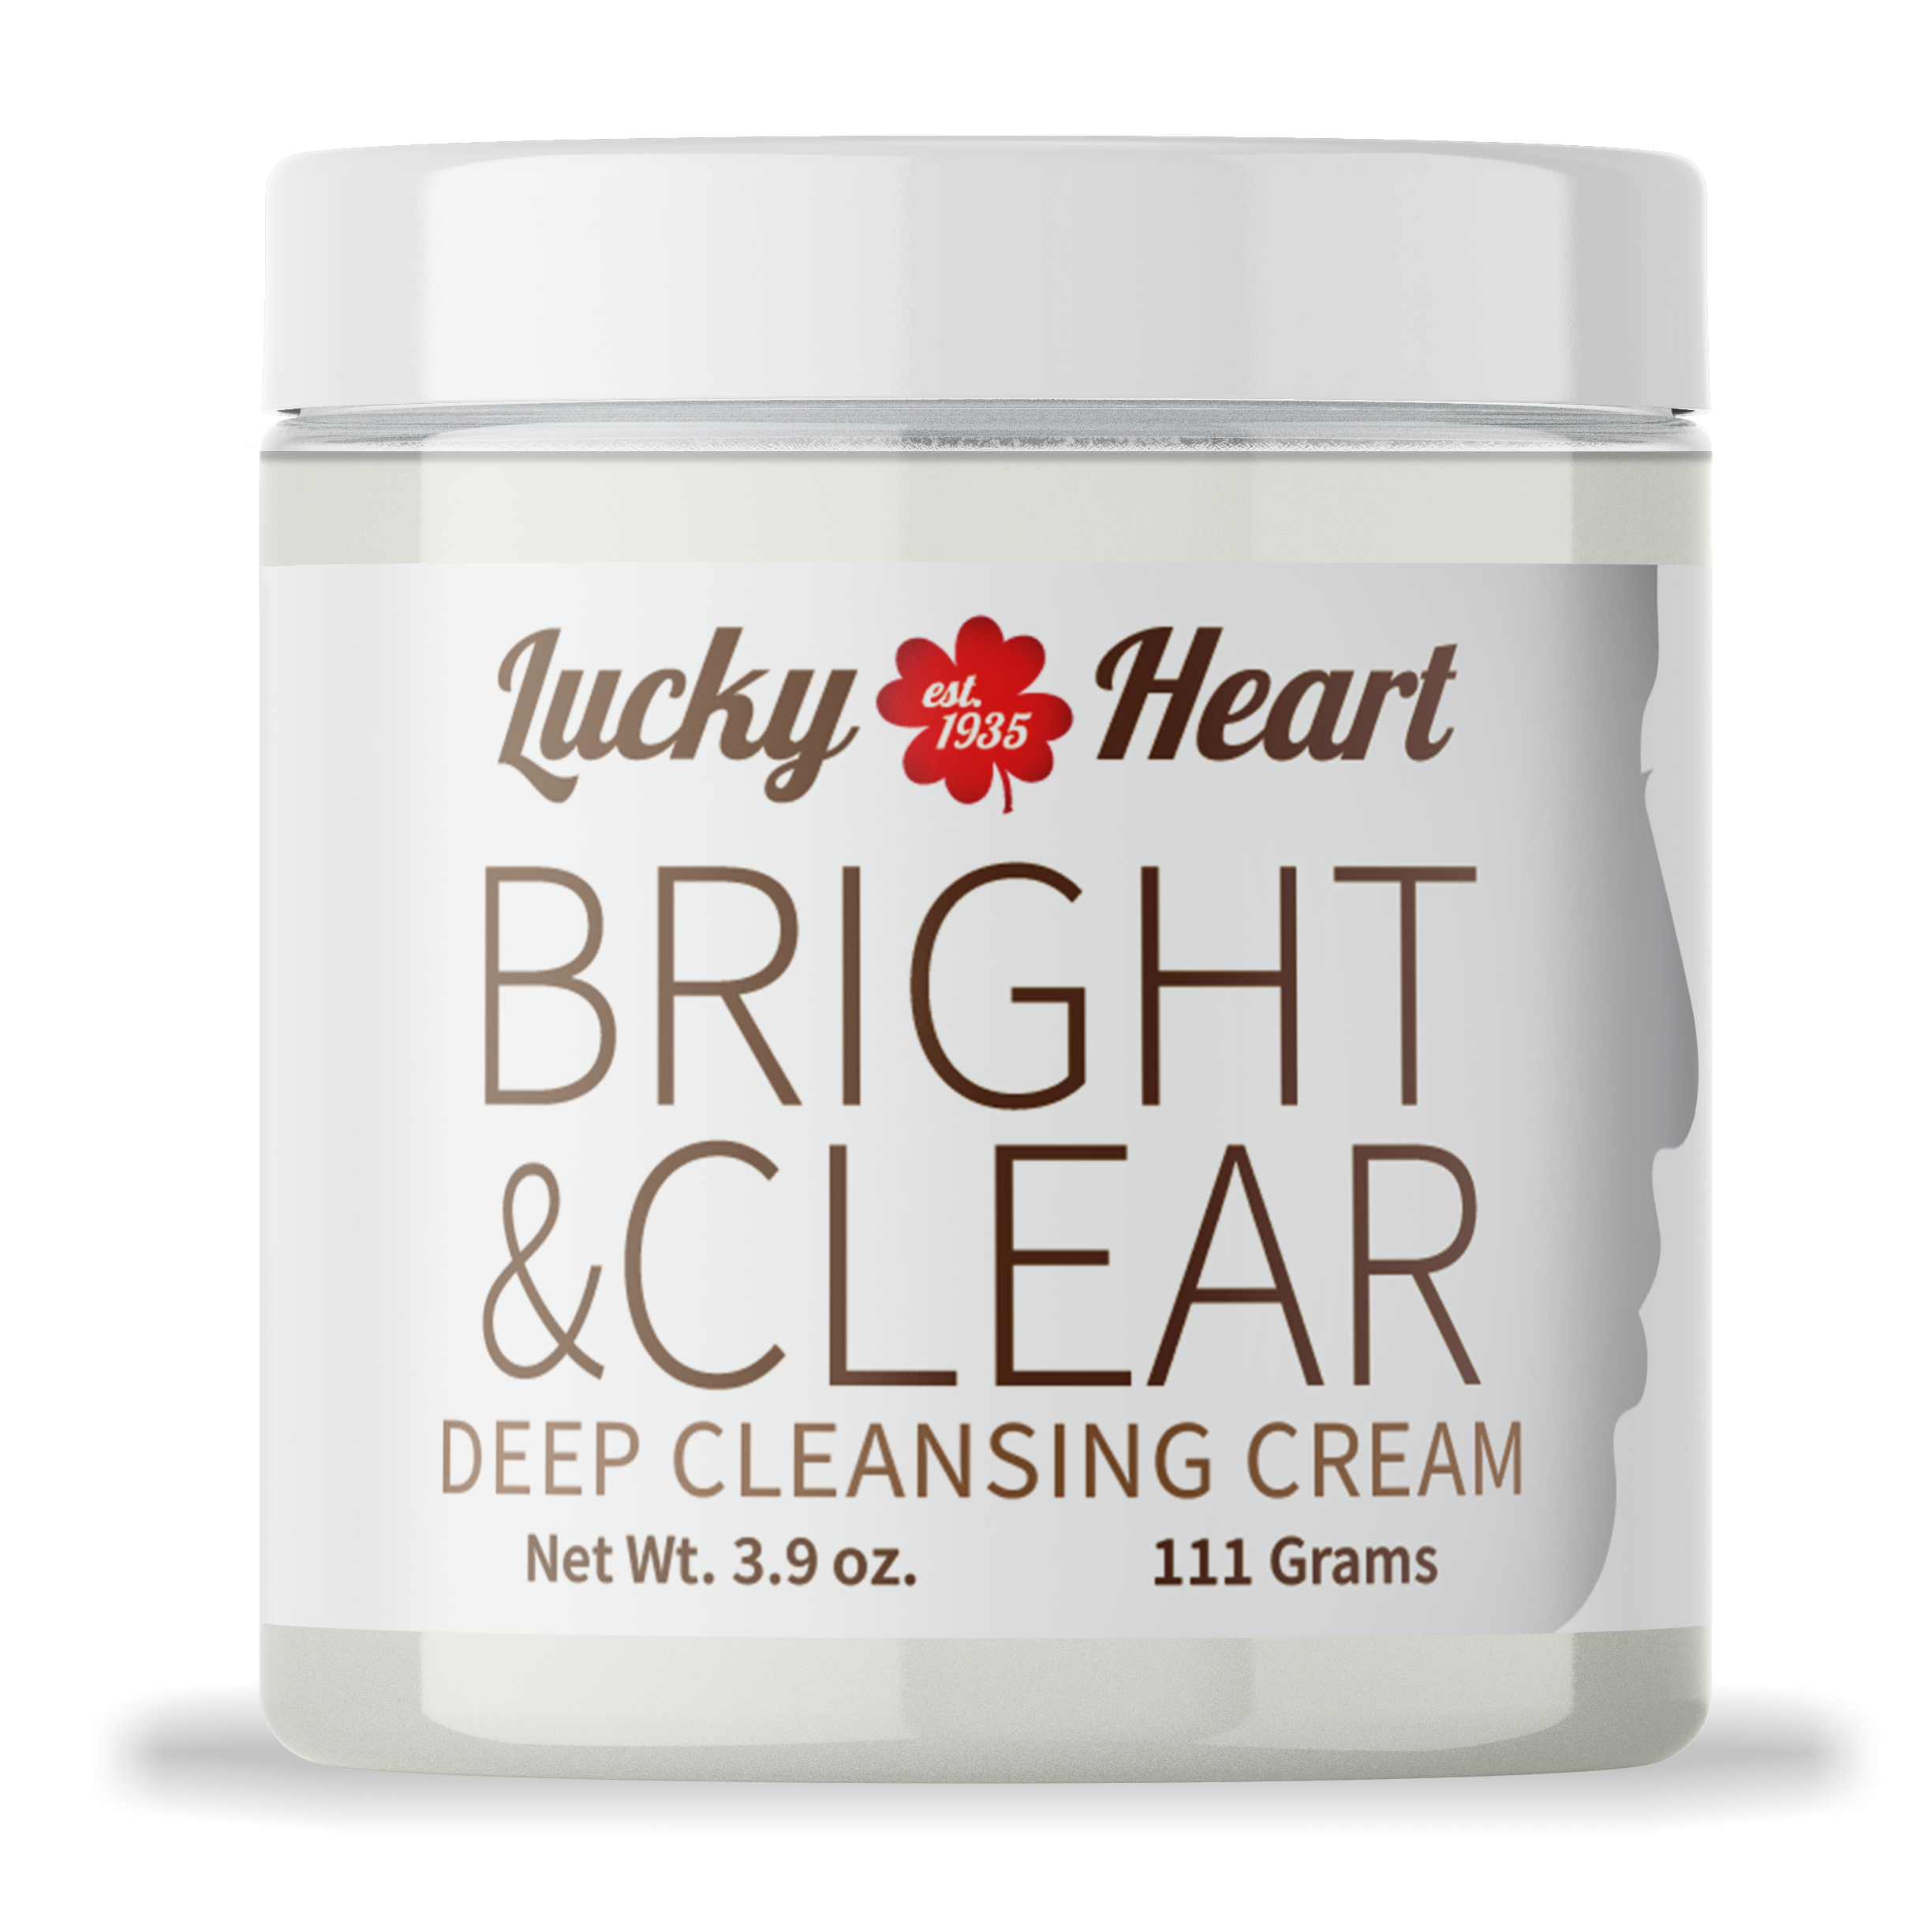 Bright & Clear Deep Cleansing Cream